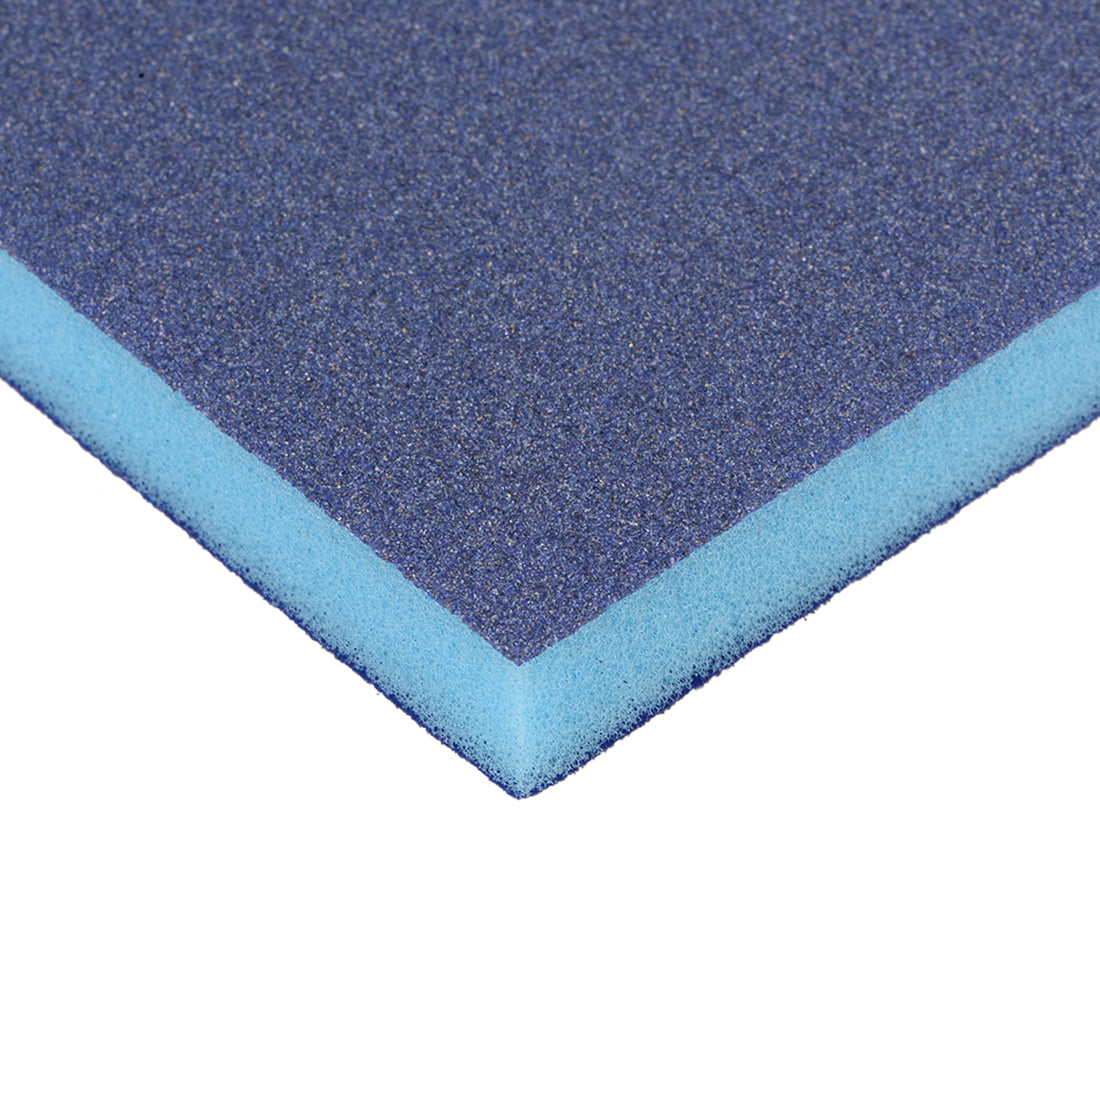 uxcell Uxcell Sanding Sponge 120 Grit Sanding Block Pad 4.7inch x 3.9inch x 0.4inch Blue 2pcs